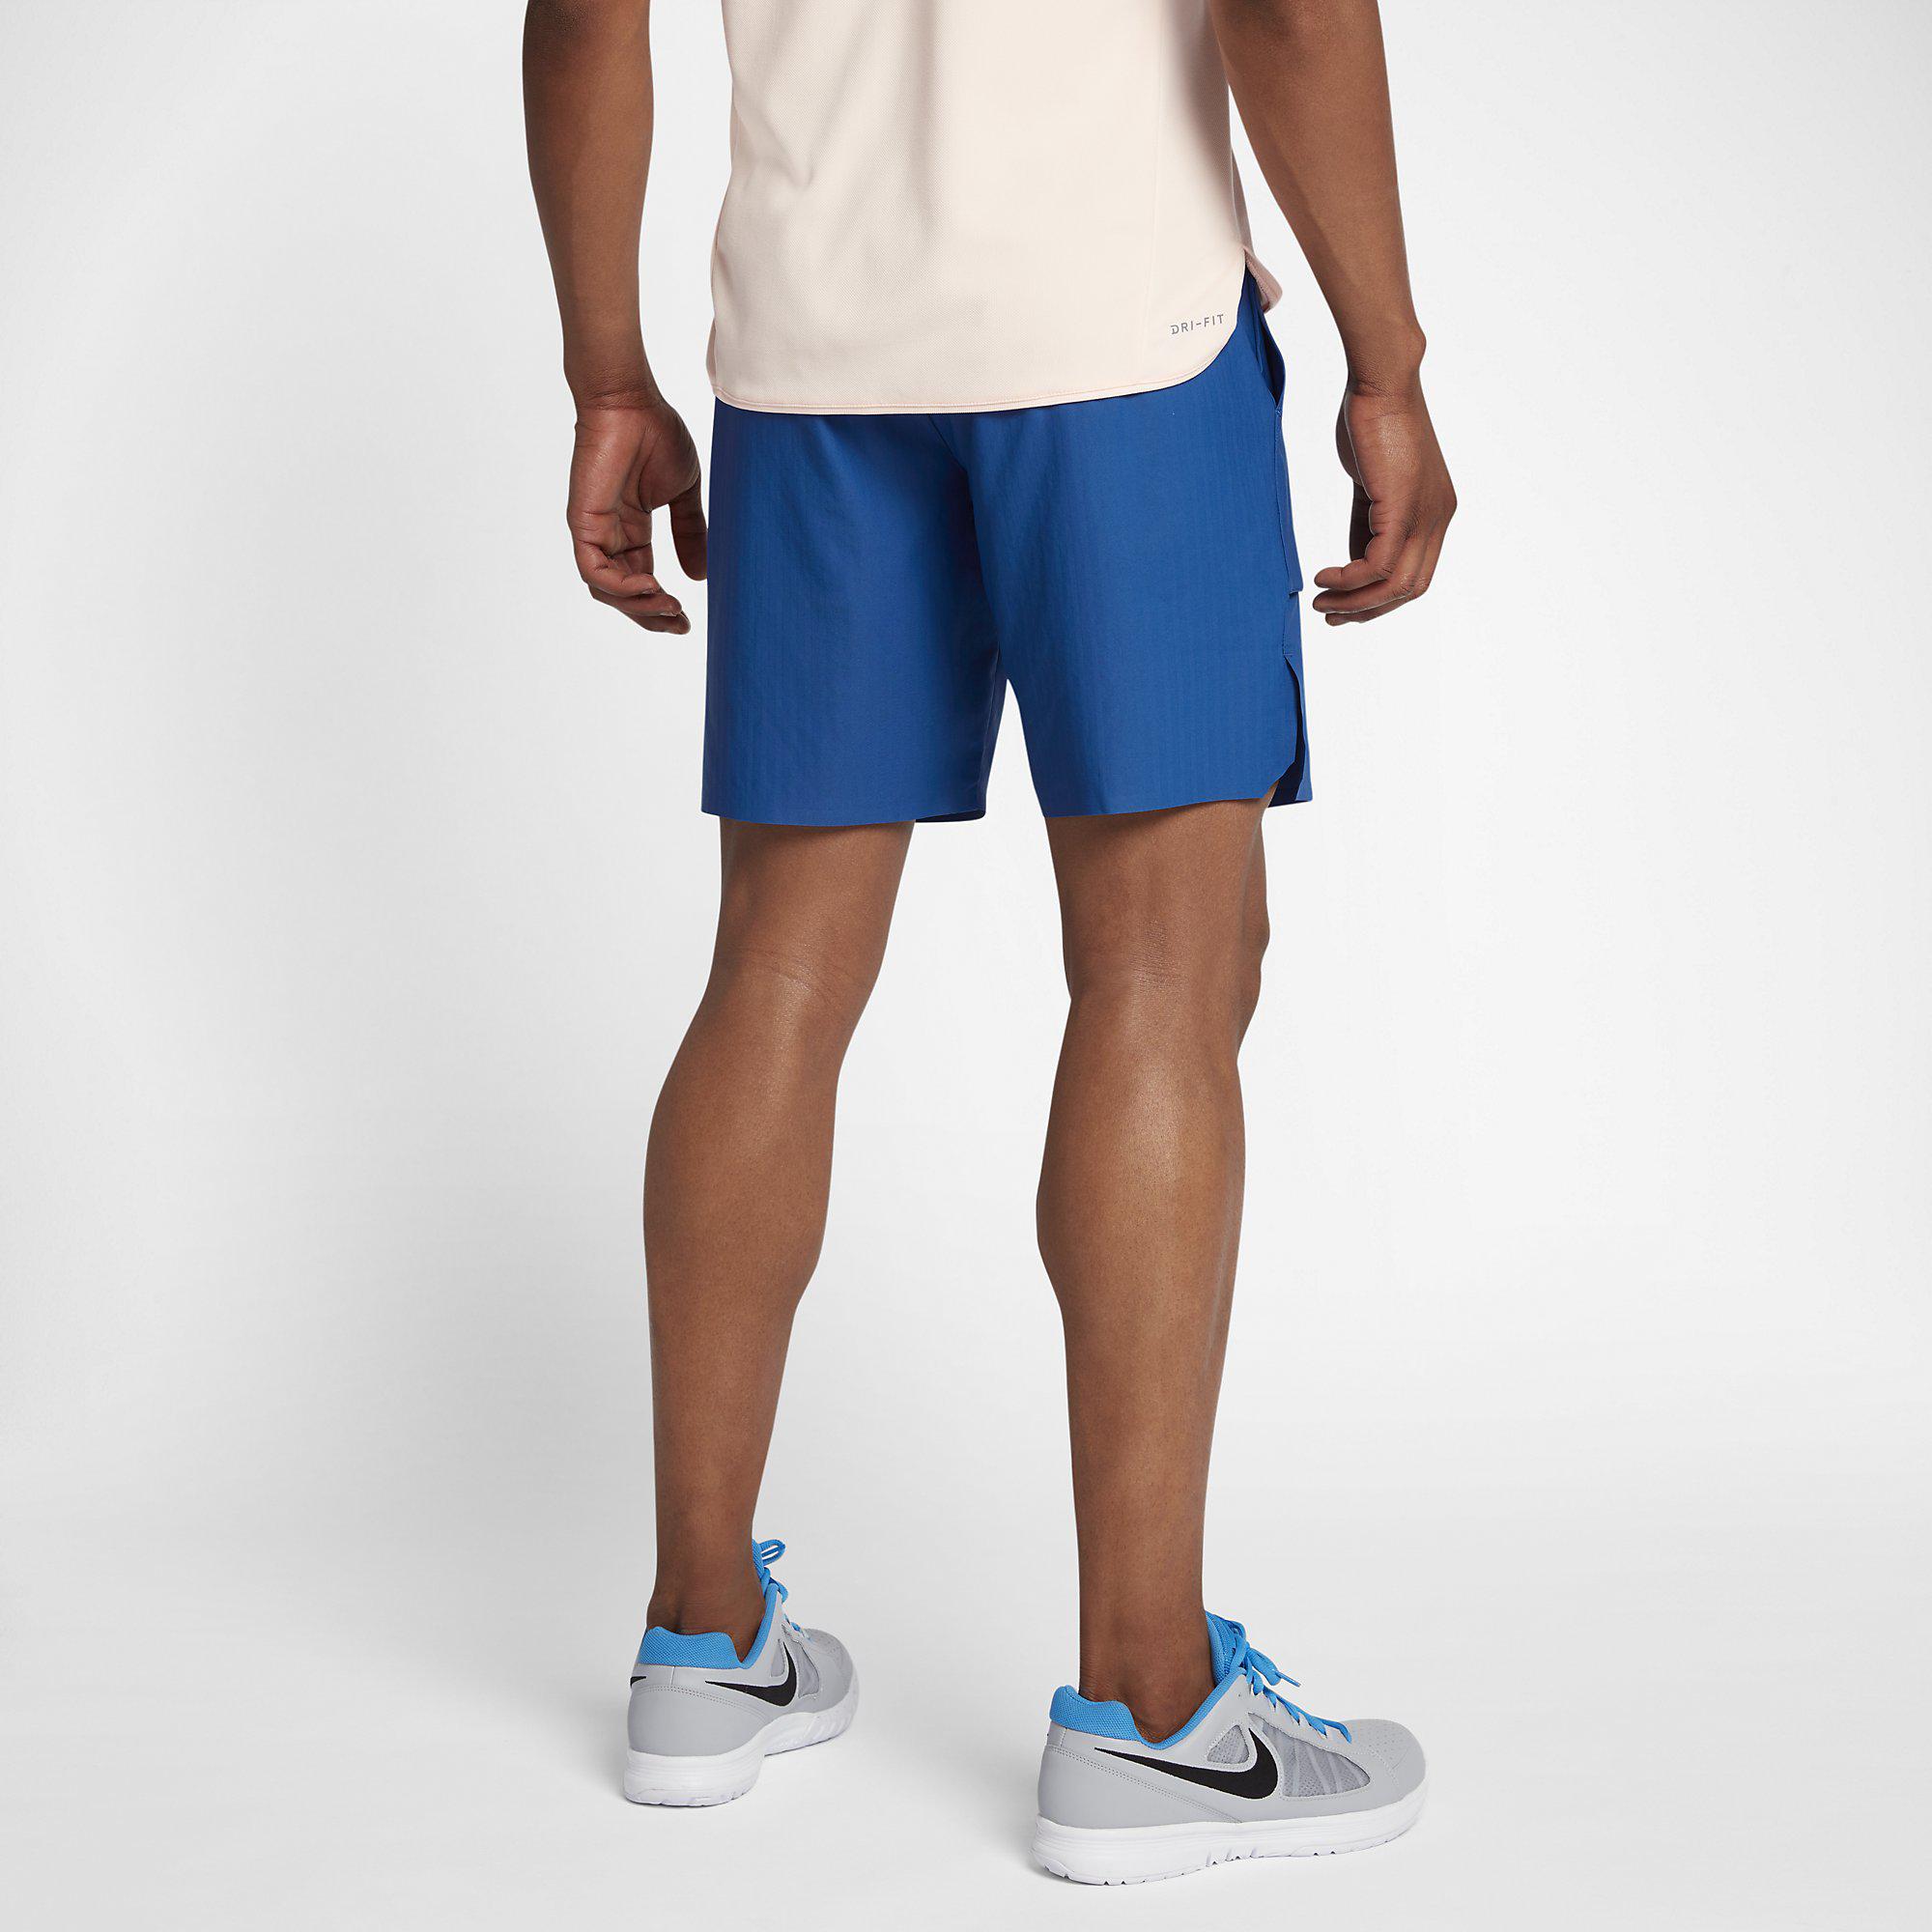 Nike Mens Flex 9 Inch Tennis Shorts - Blue Jay - Tennisnuts.com